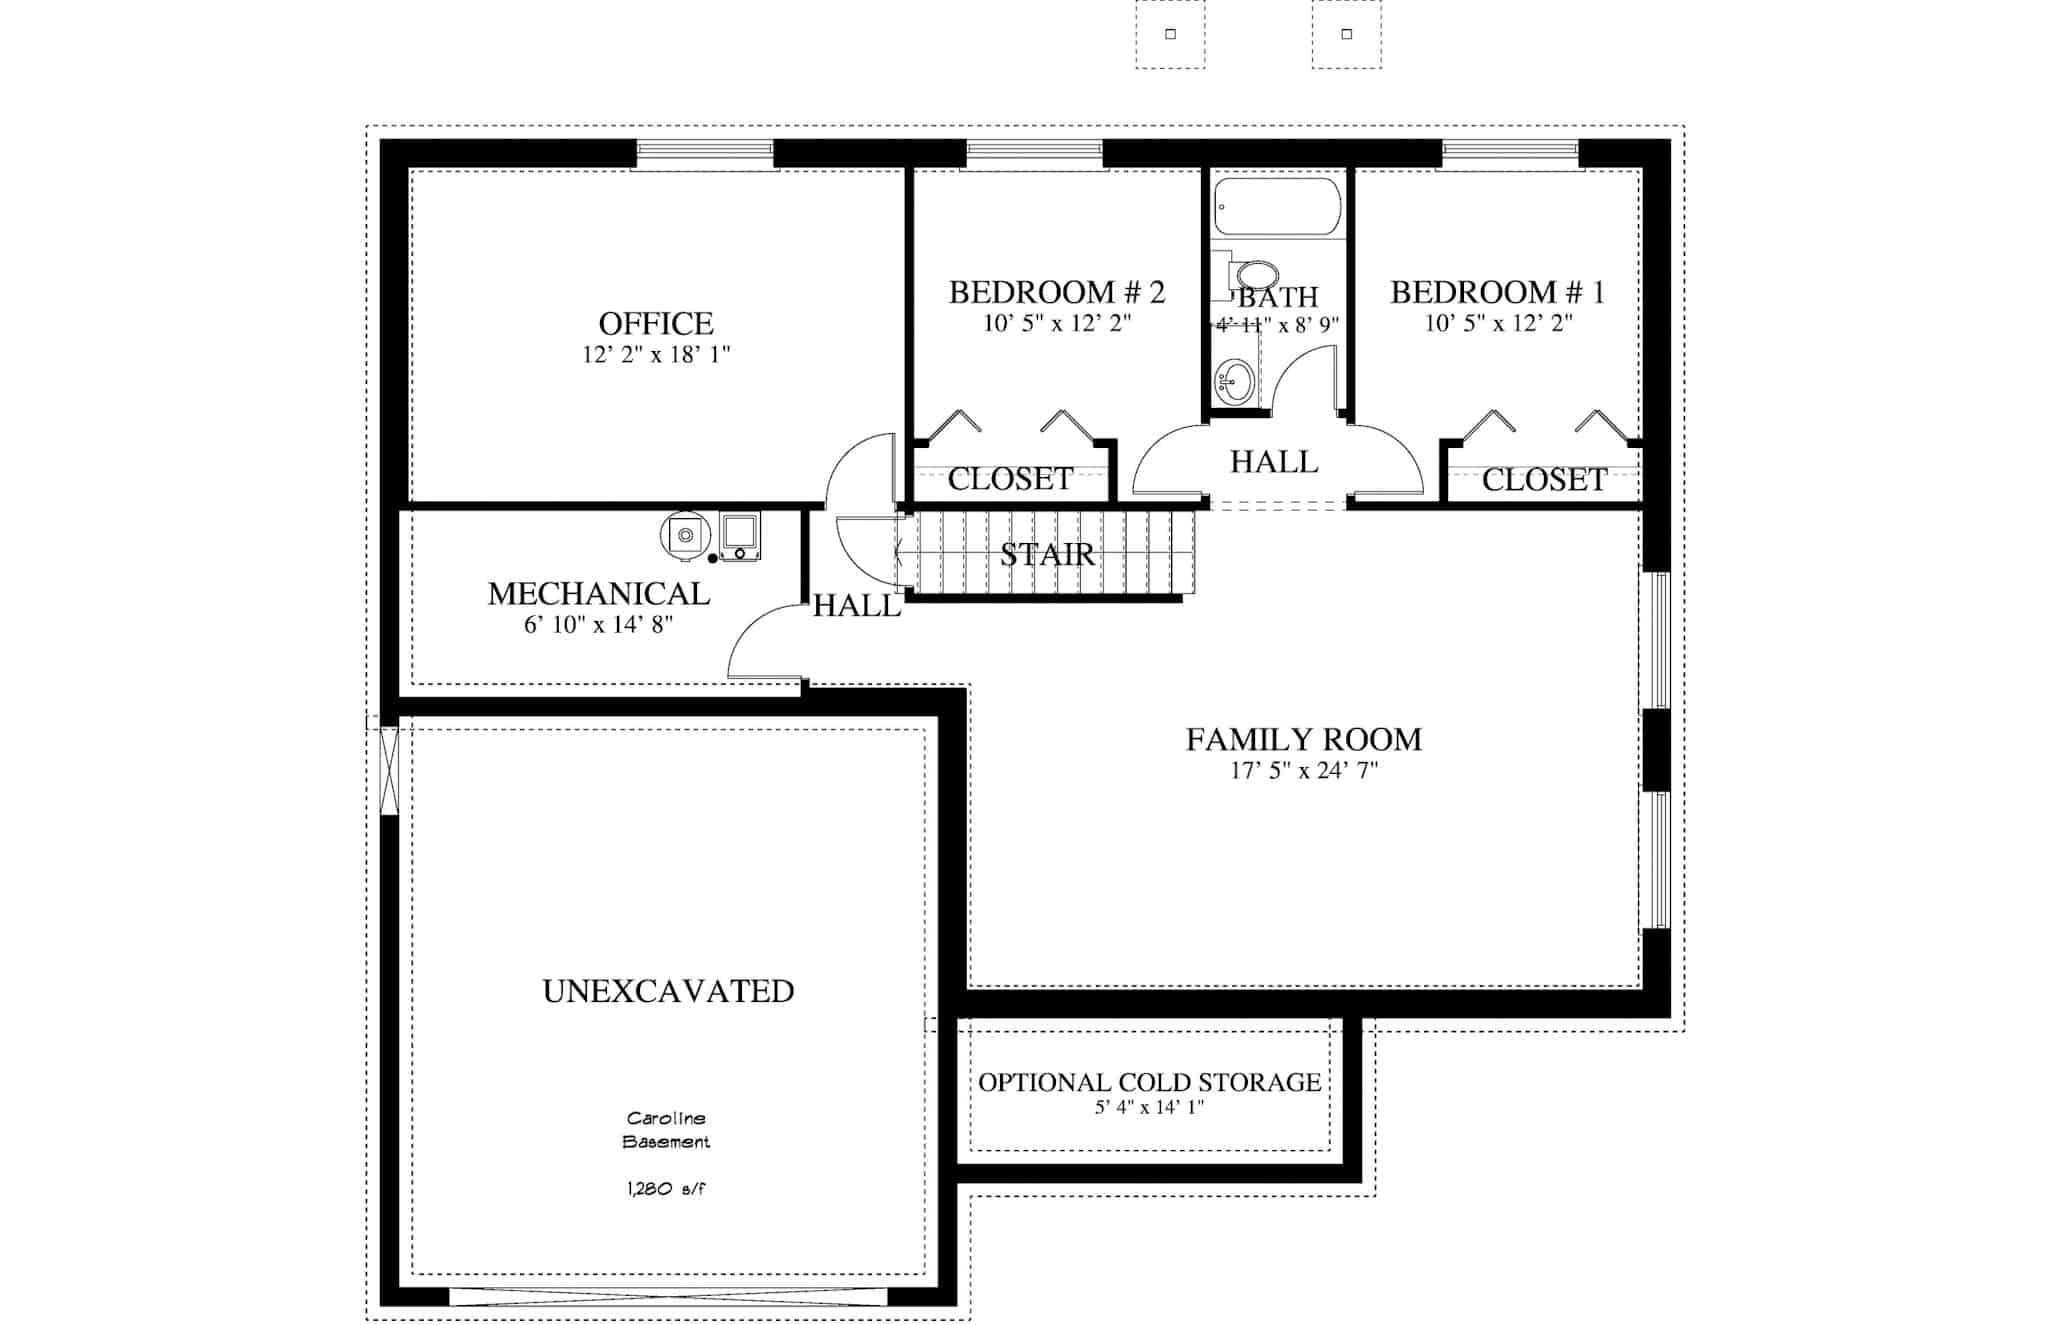 Contemporary Ranch Floor Plan - 3-5 Bedrms, 3-4 Baths, 1280-2560 Sq Ft